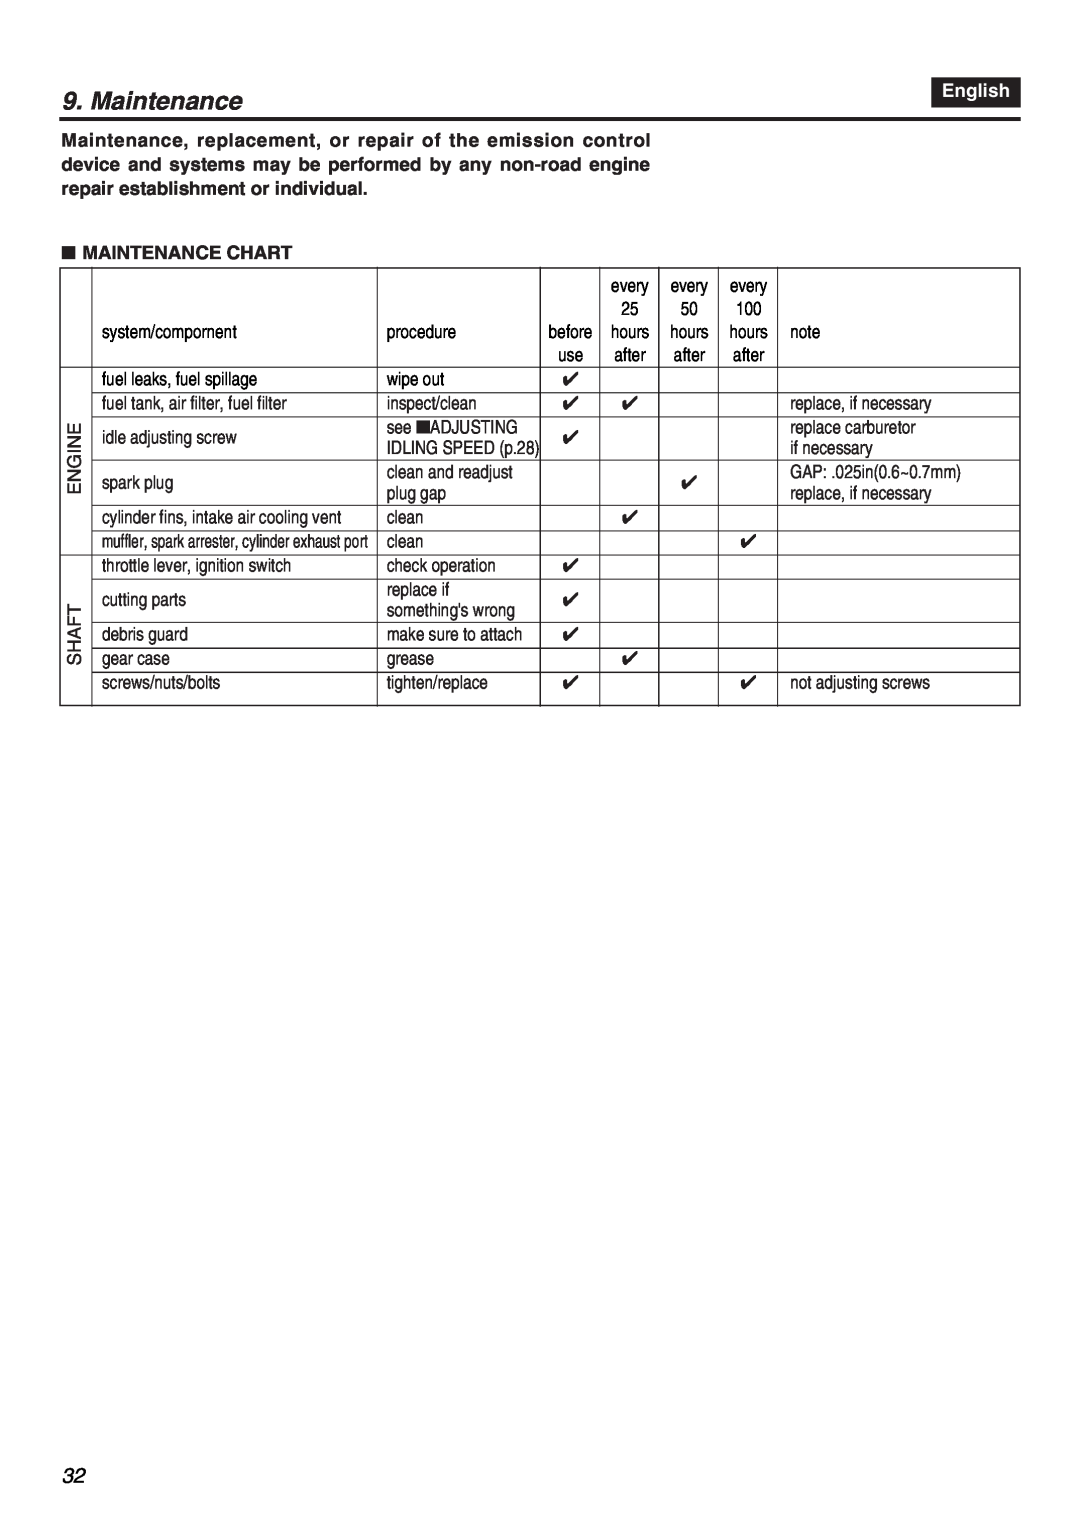 RedMax BCZ2401S-CA manual English, Maintenance Chart 